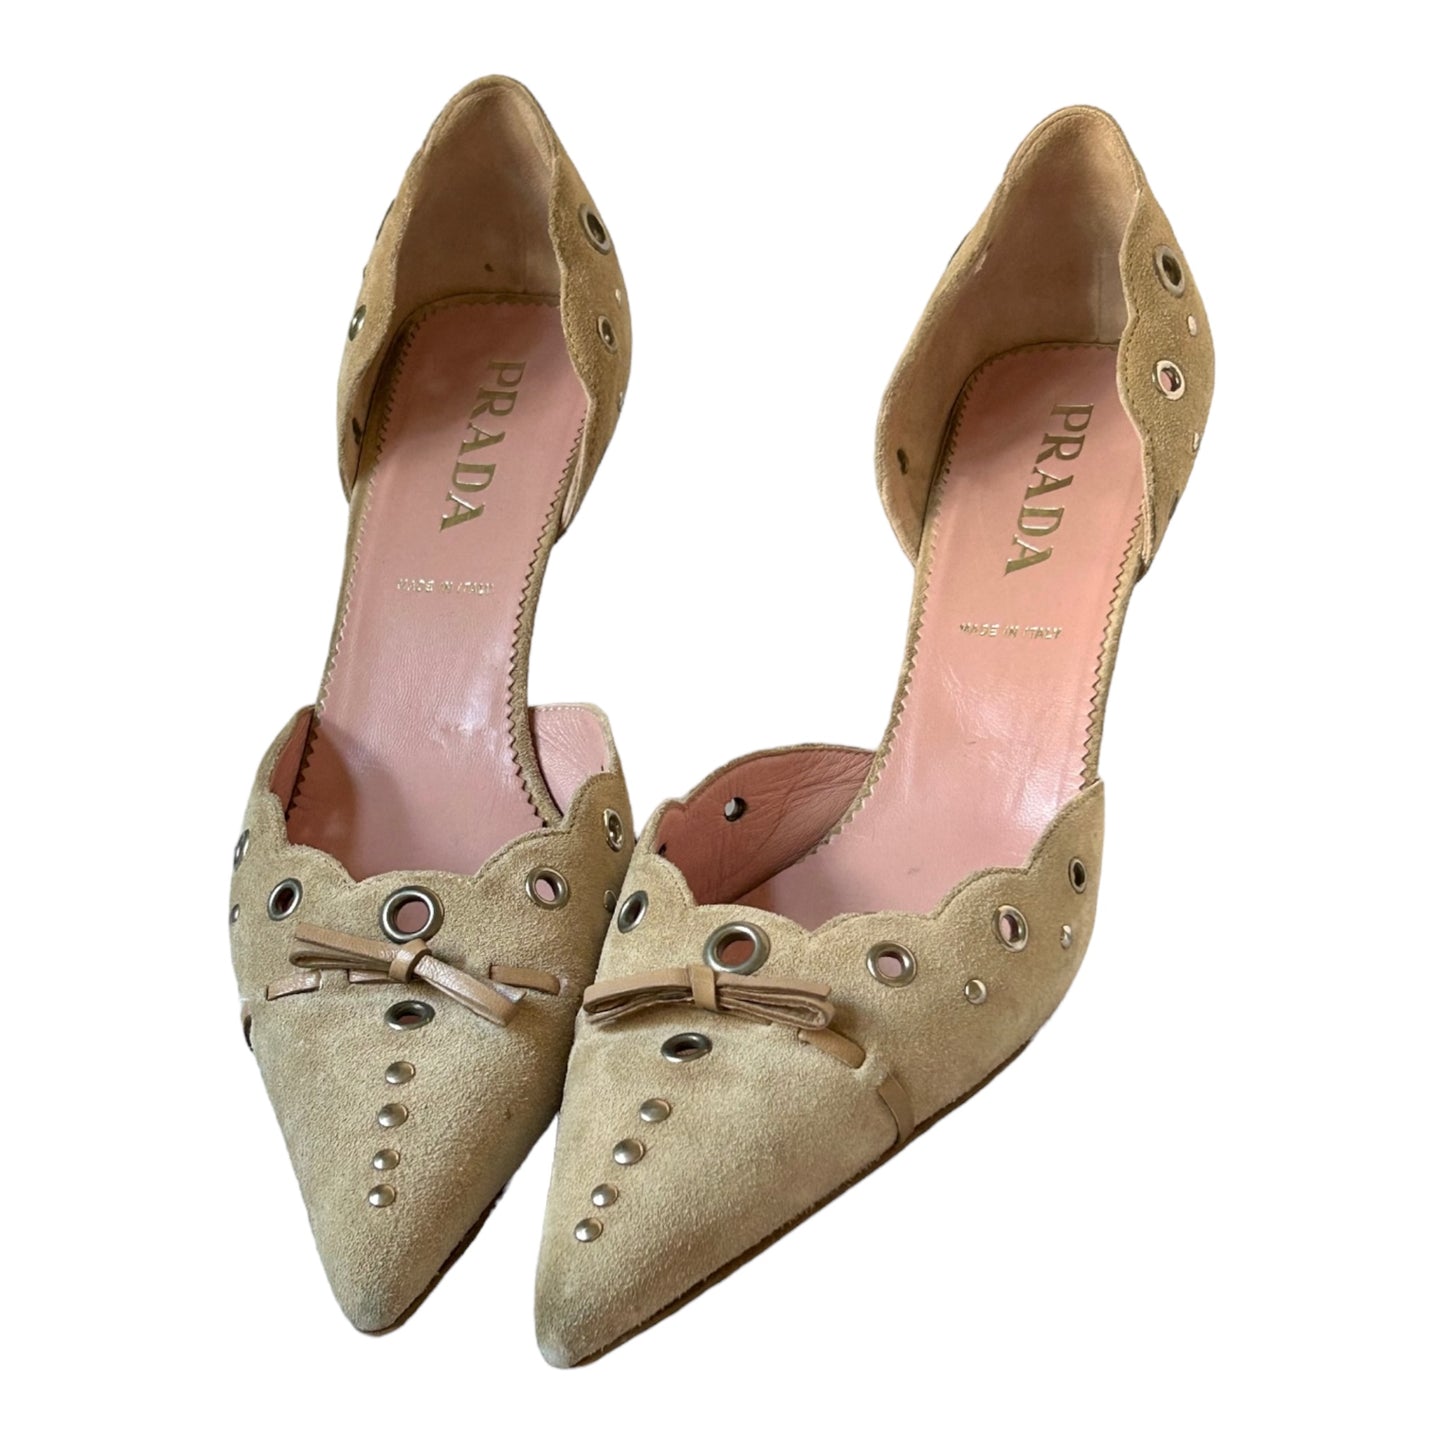 Vintage Prada beige suede kitten heels